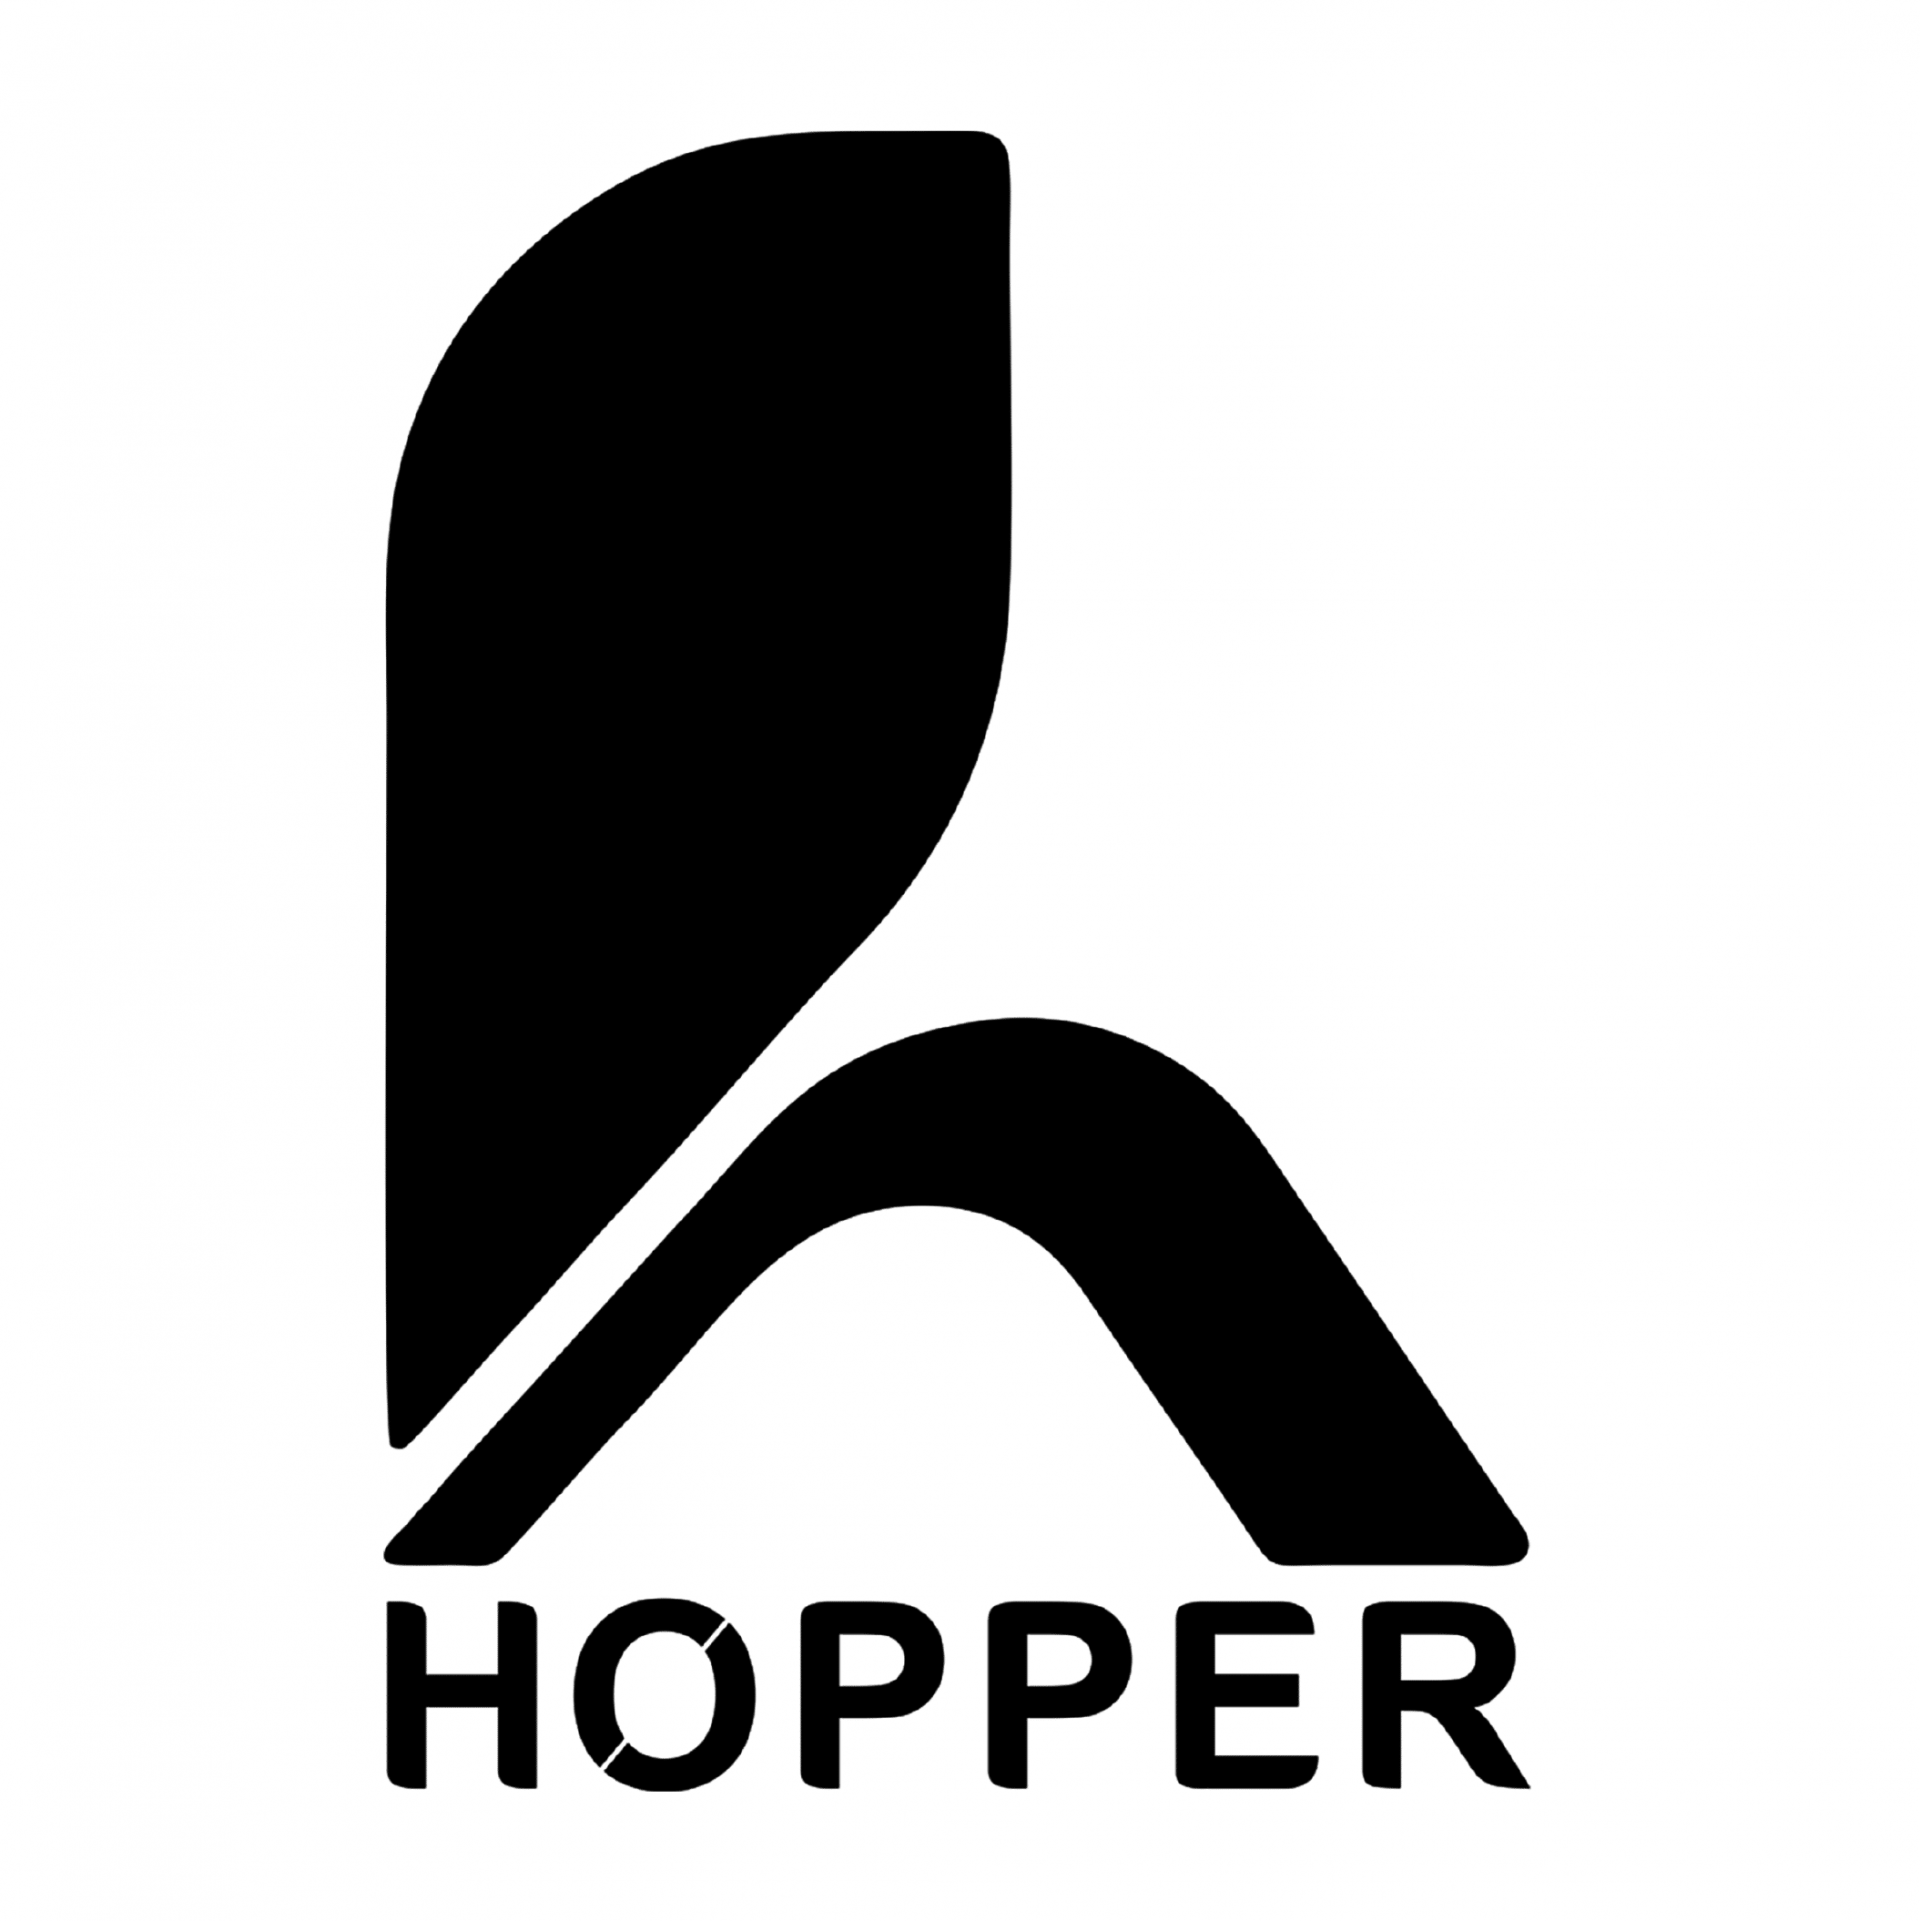 Hopper Mobility Logo